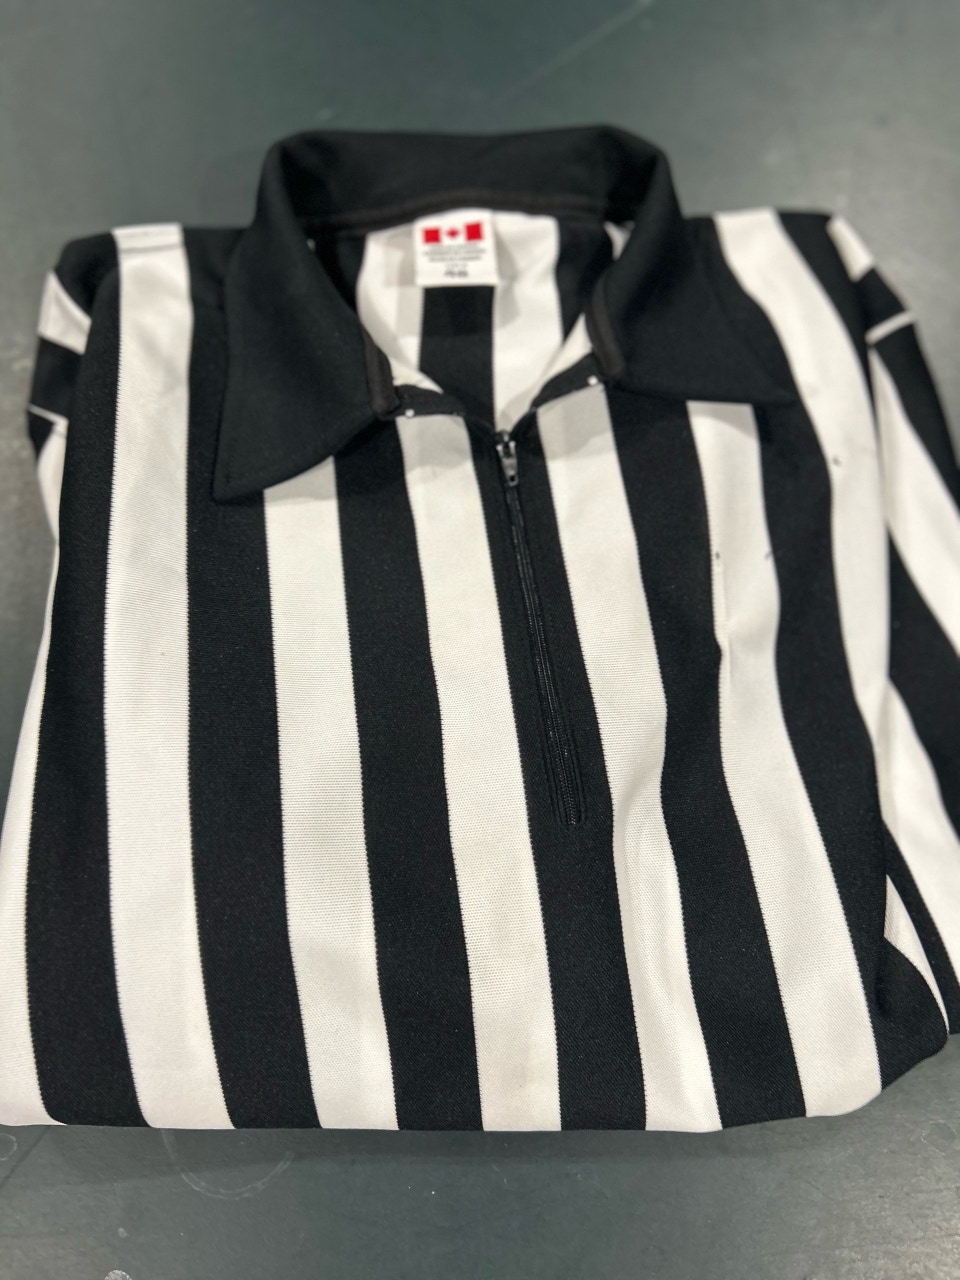 New Referee Jersey - Size 48